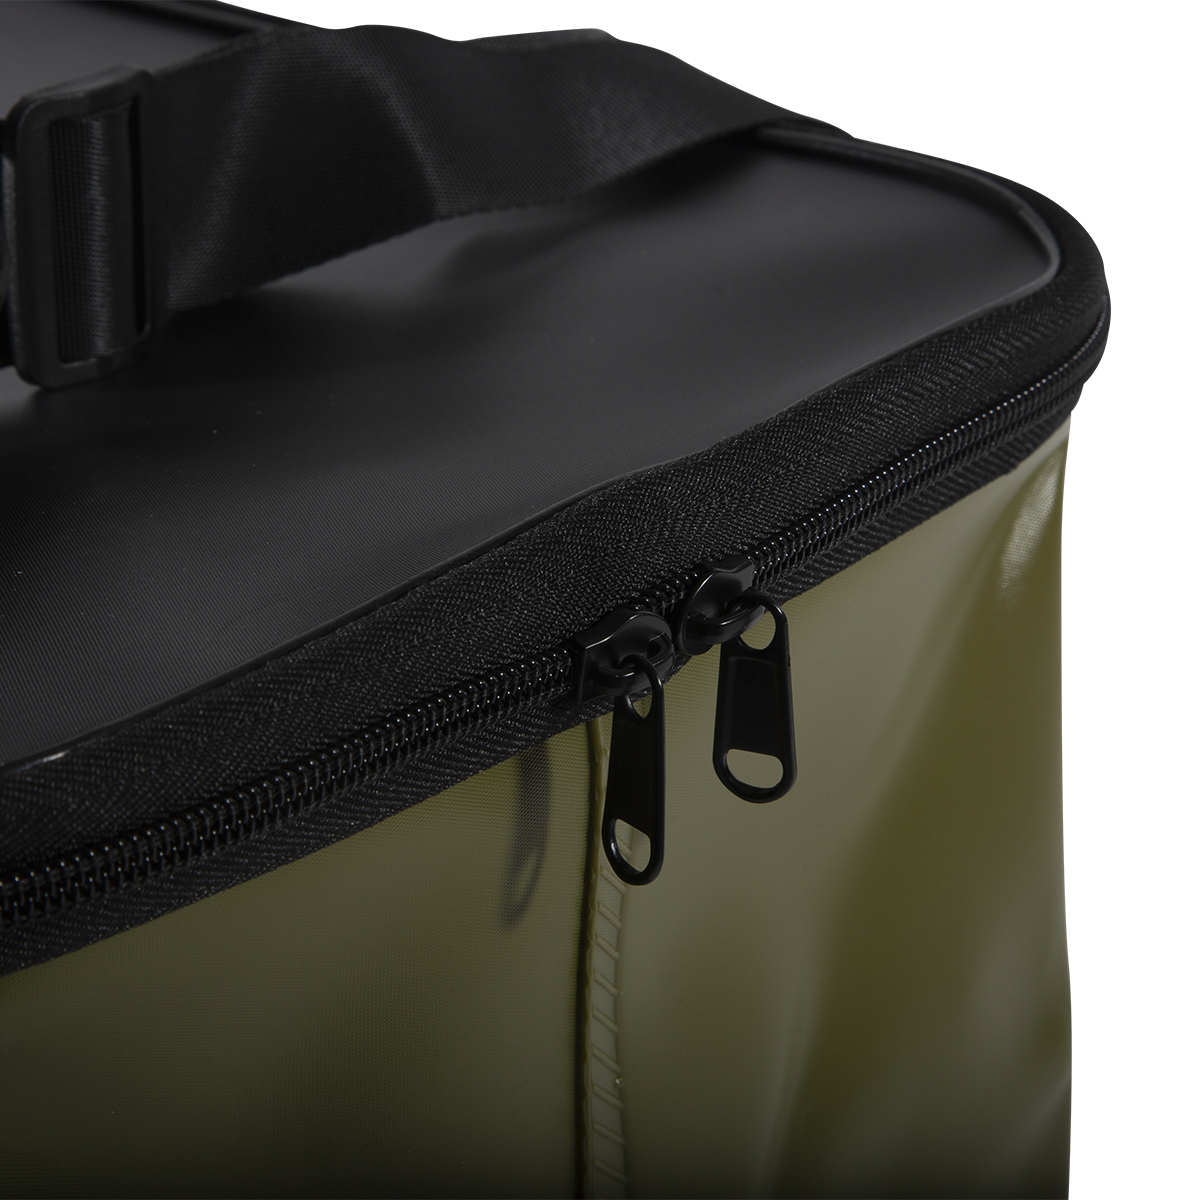 Tactic Carp Waterproof Luggage Waterdichte Tassen